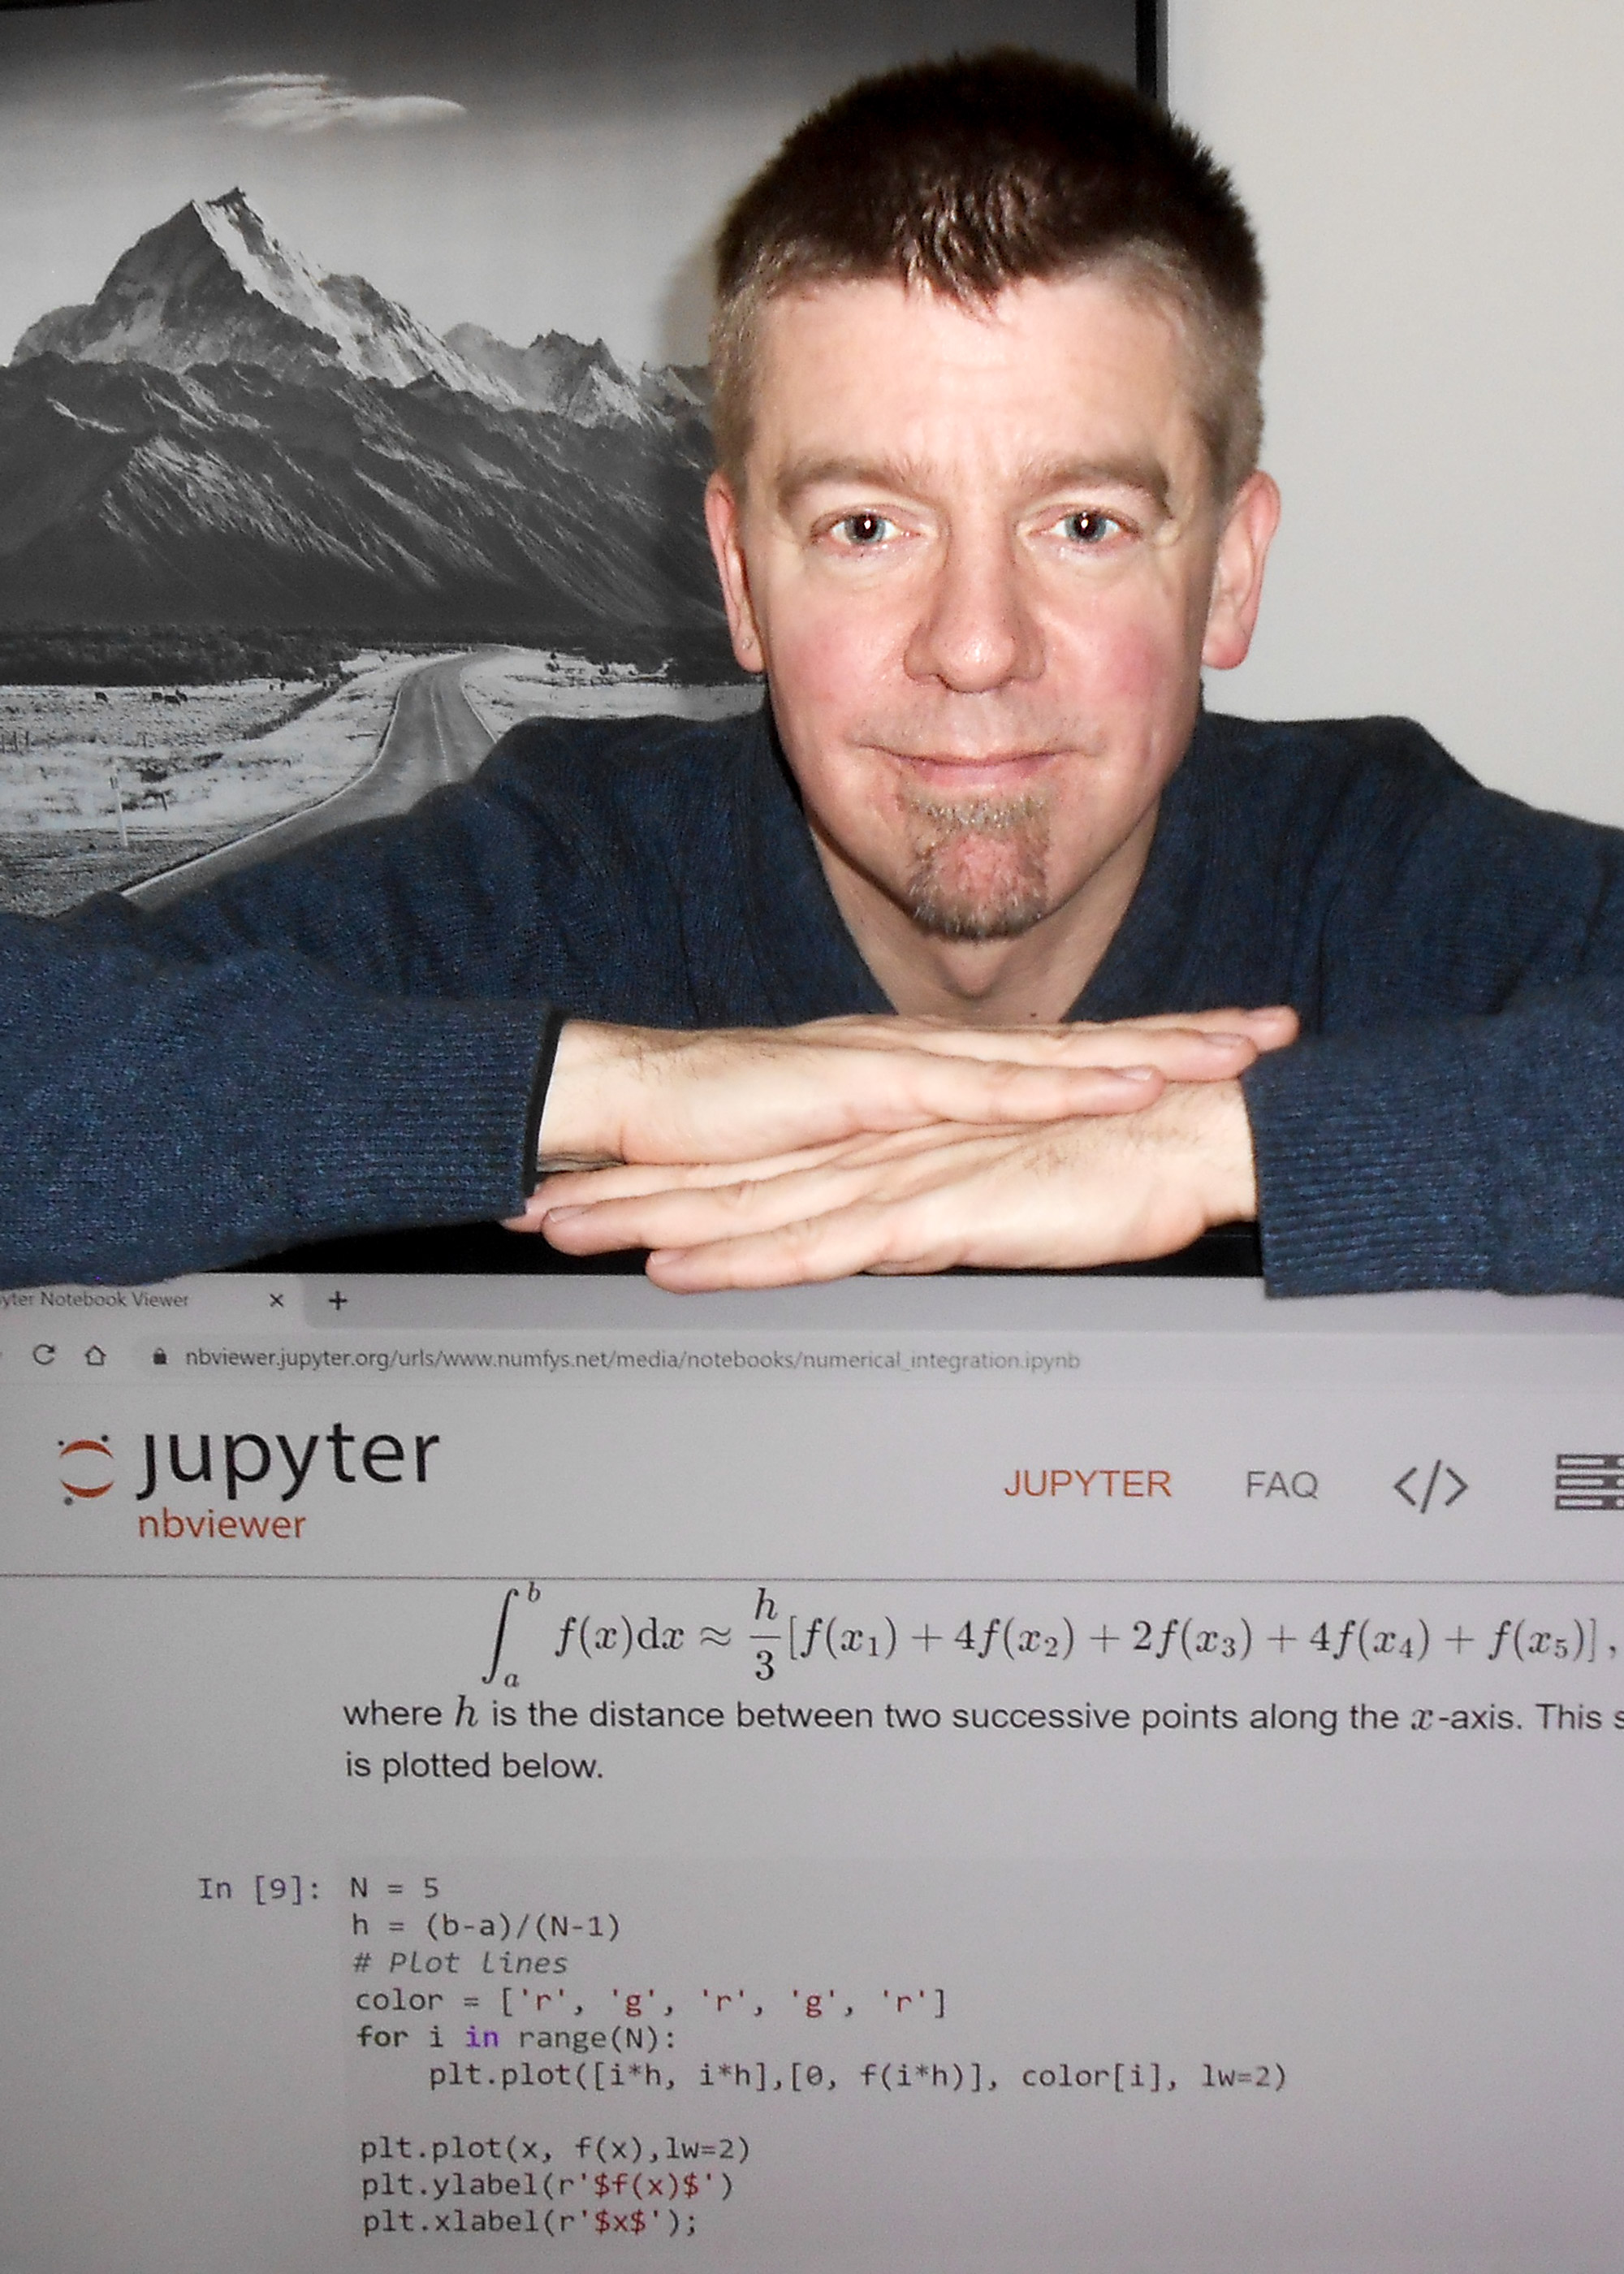 Dr. Peter Berg posing with a computer displaying Jupyter Notebook